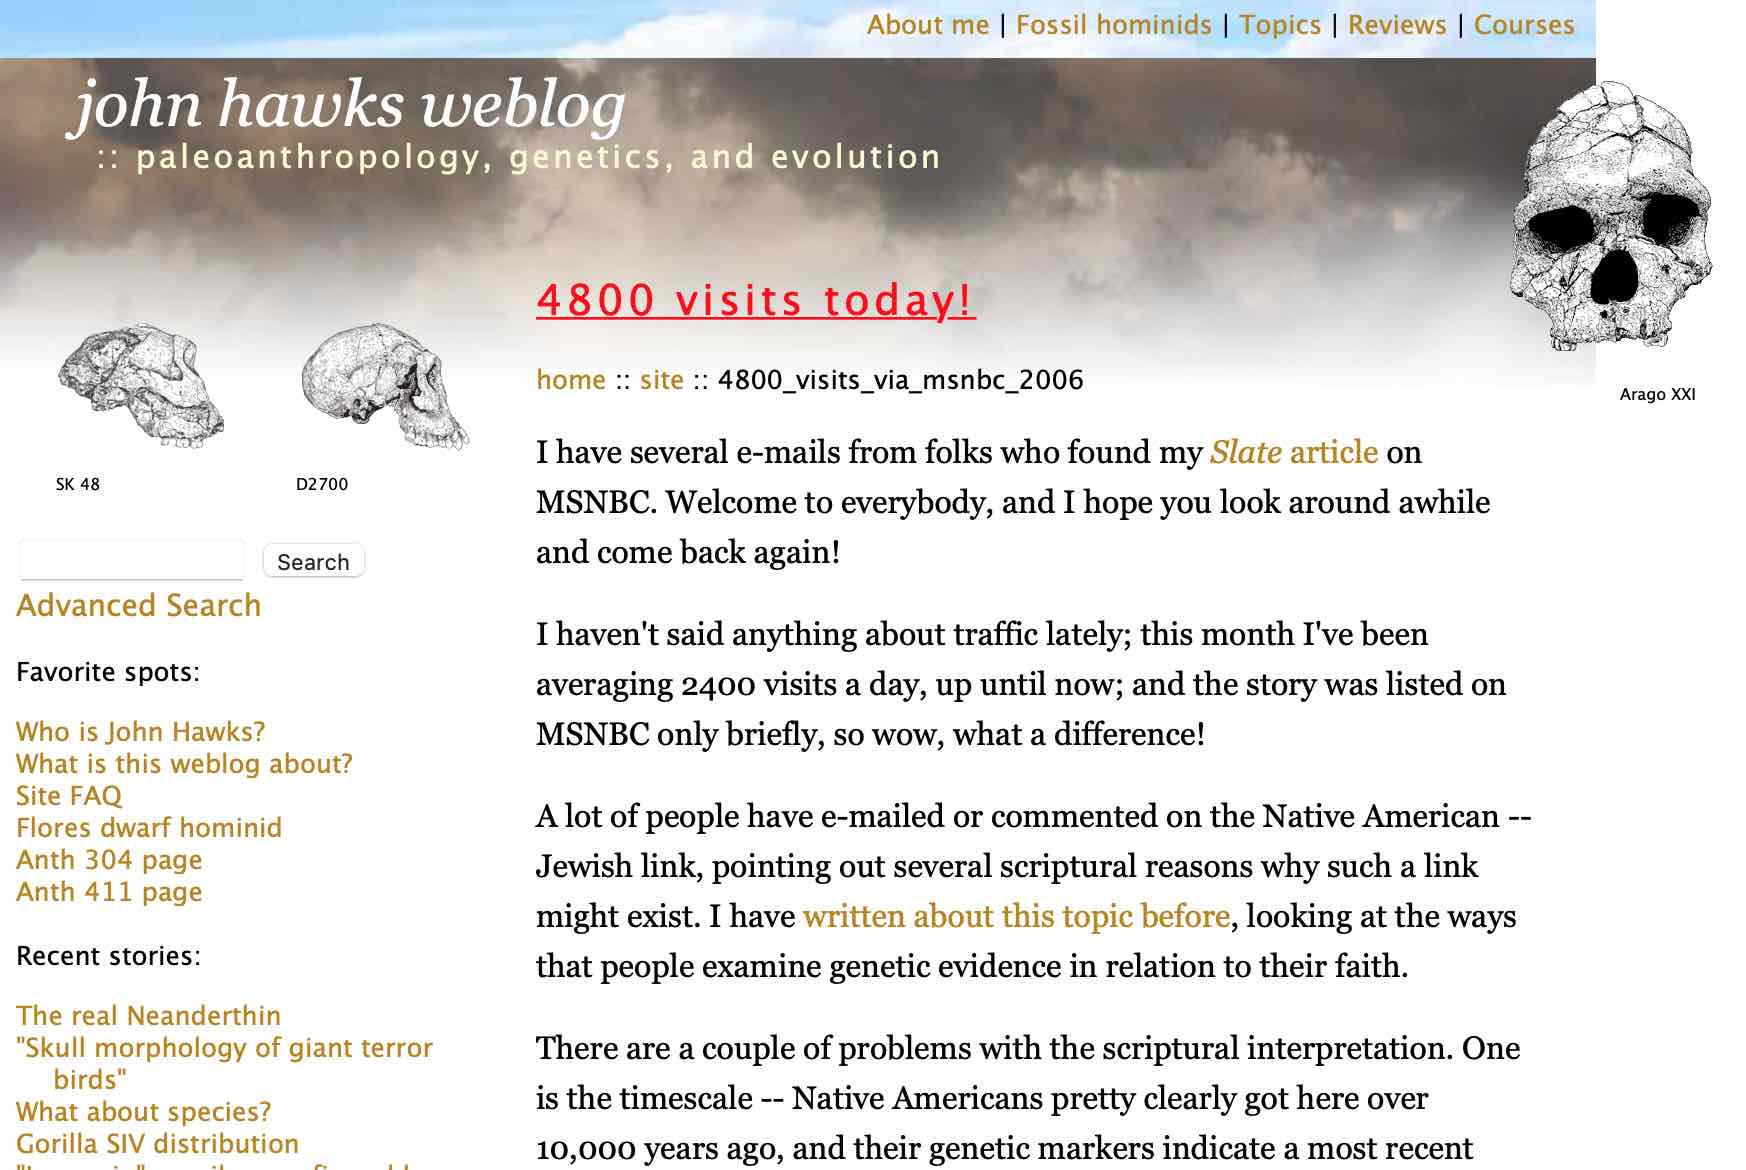 John Hawks weblog front page circa 2006